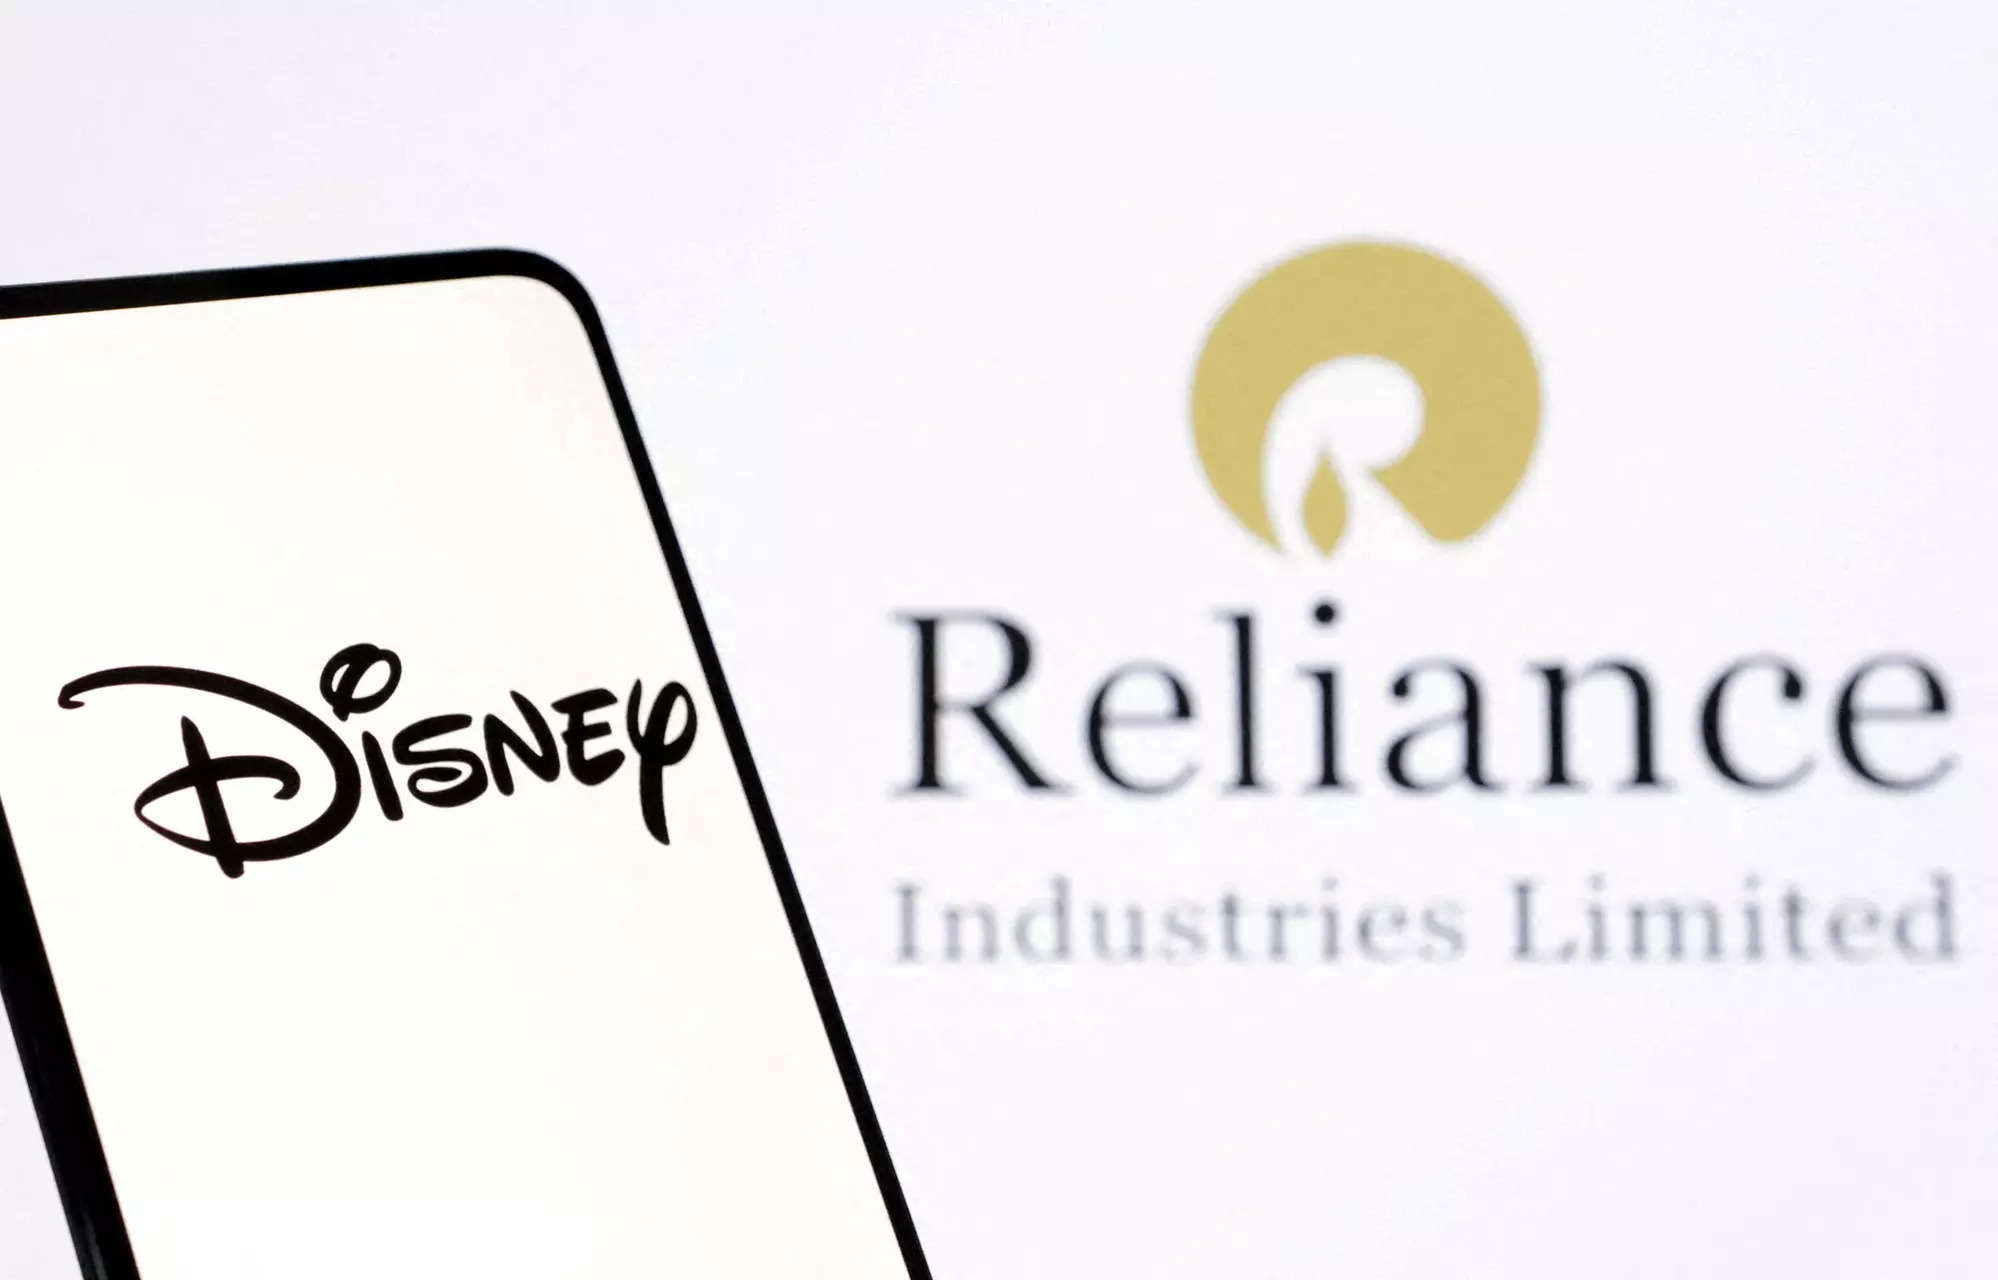 India sends 100 antitrust queries for Reliance, Disney $8.5 bln merger, sources say 